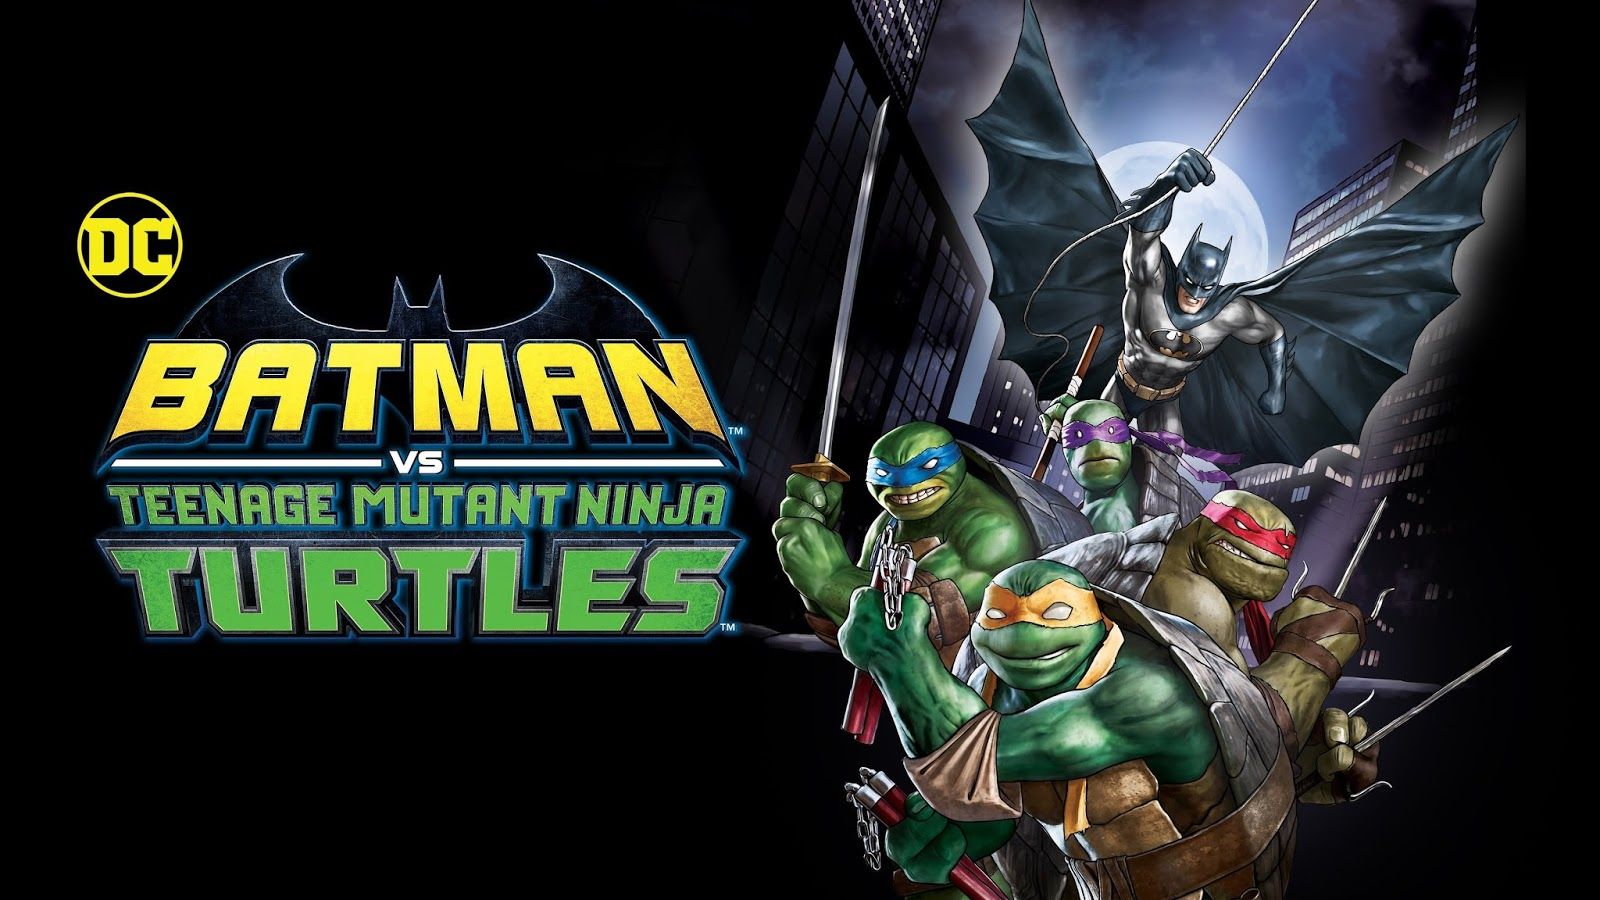 NickALive!: Nicktoons USA to Premiere 'Batman vs. Teenage Mutant Ninja Turtles' on Wednesday, November 2019